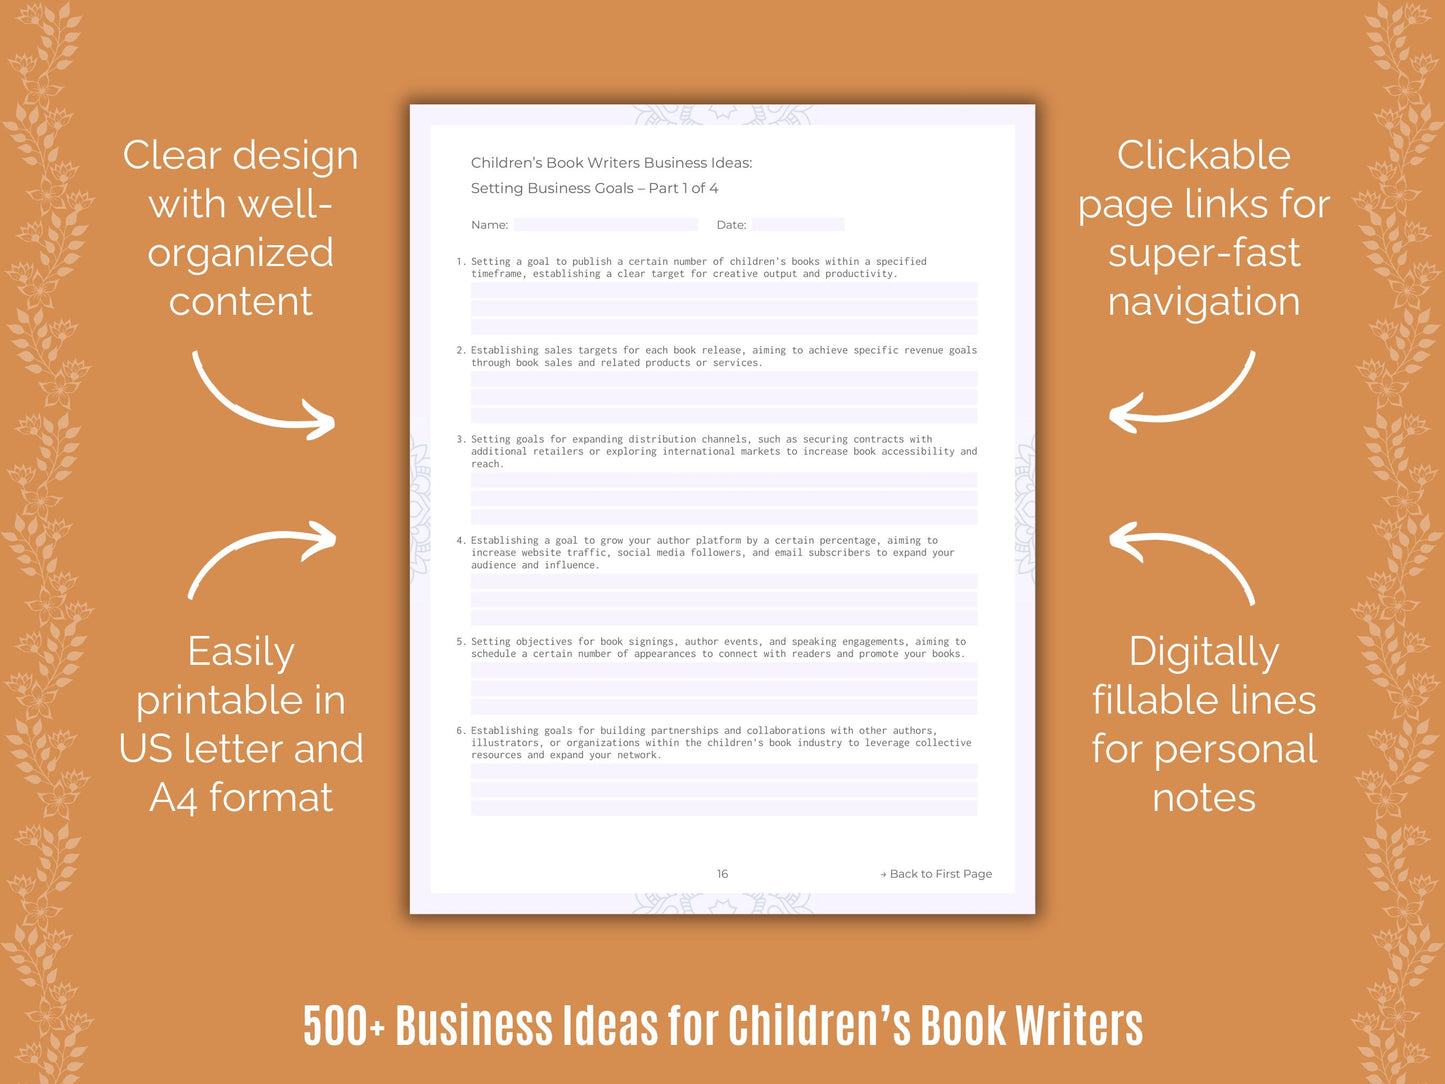 Children’s Book Writers Business Ideas